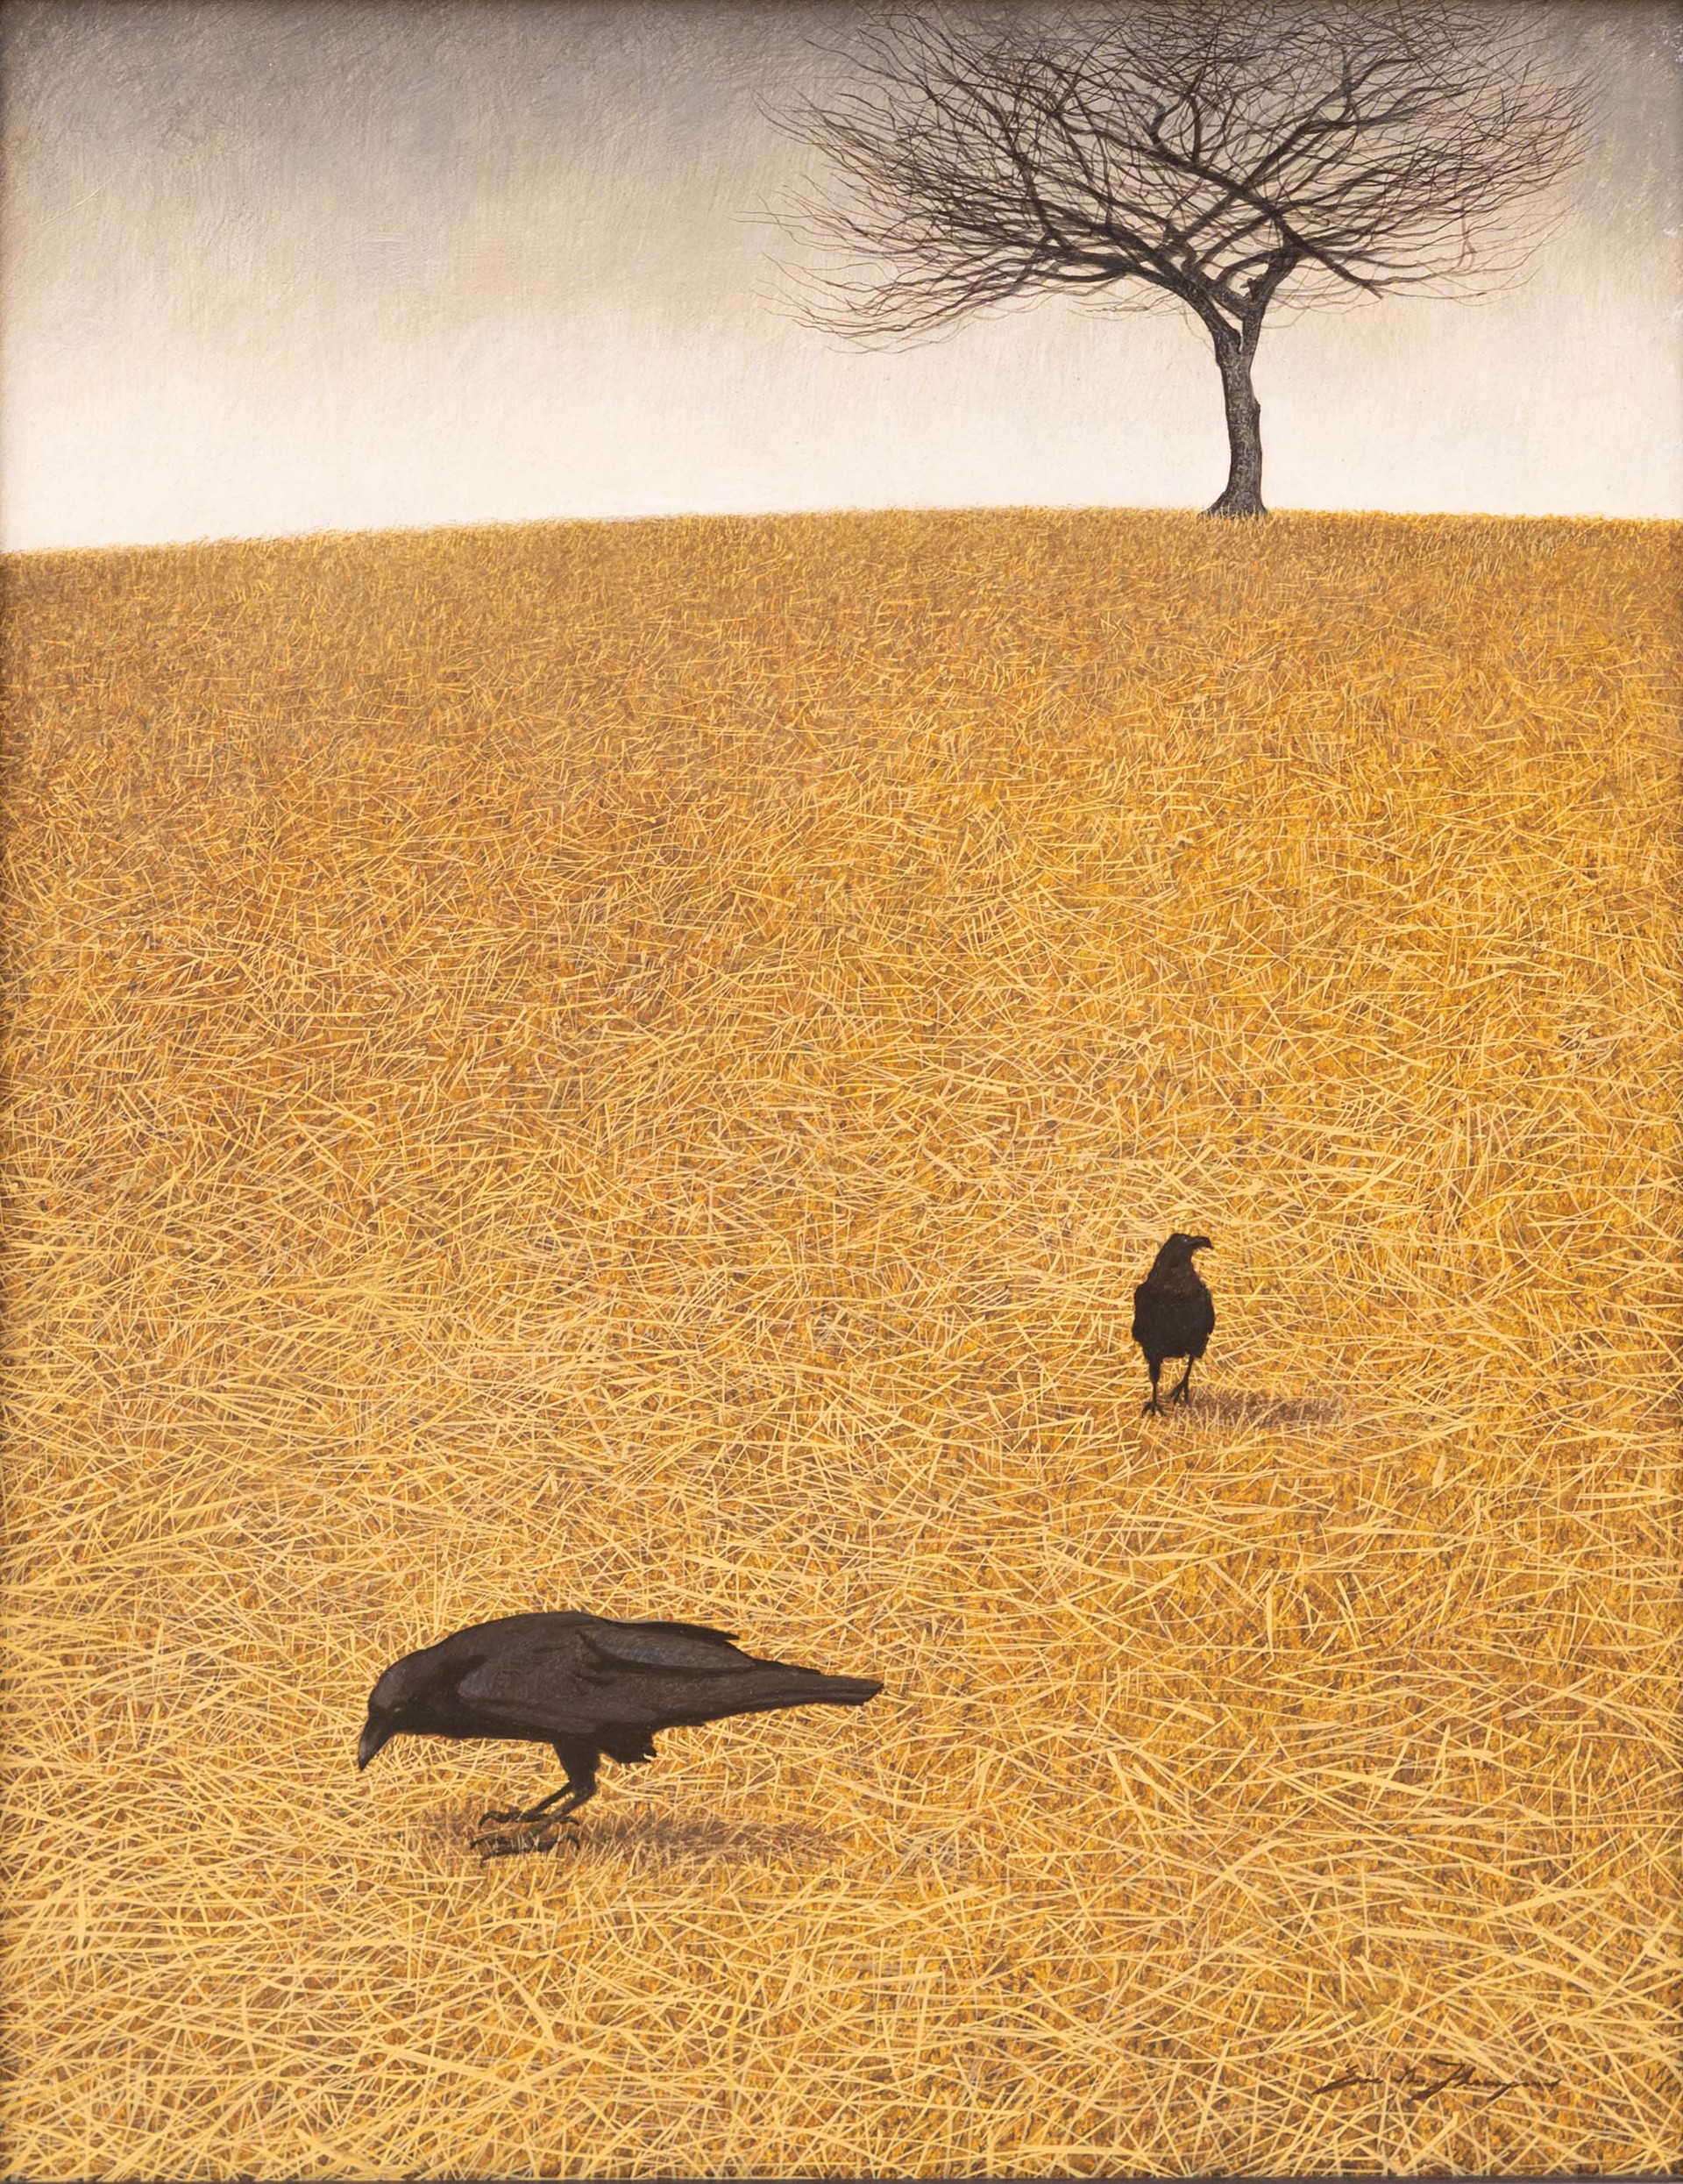 Raven's Dream by Eric G. Thompson